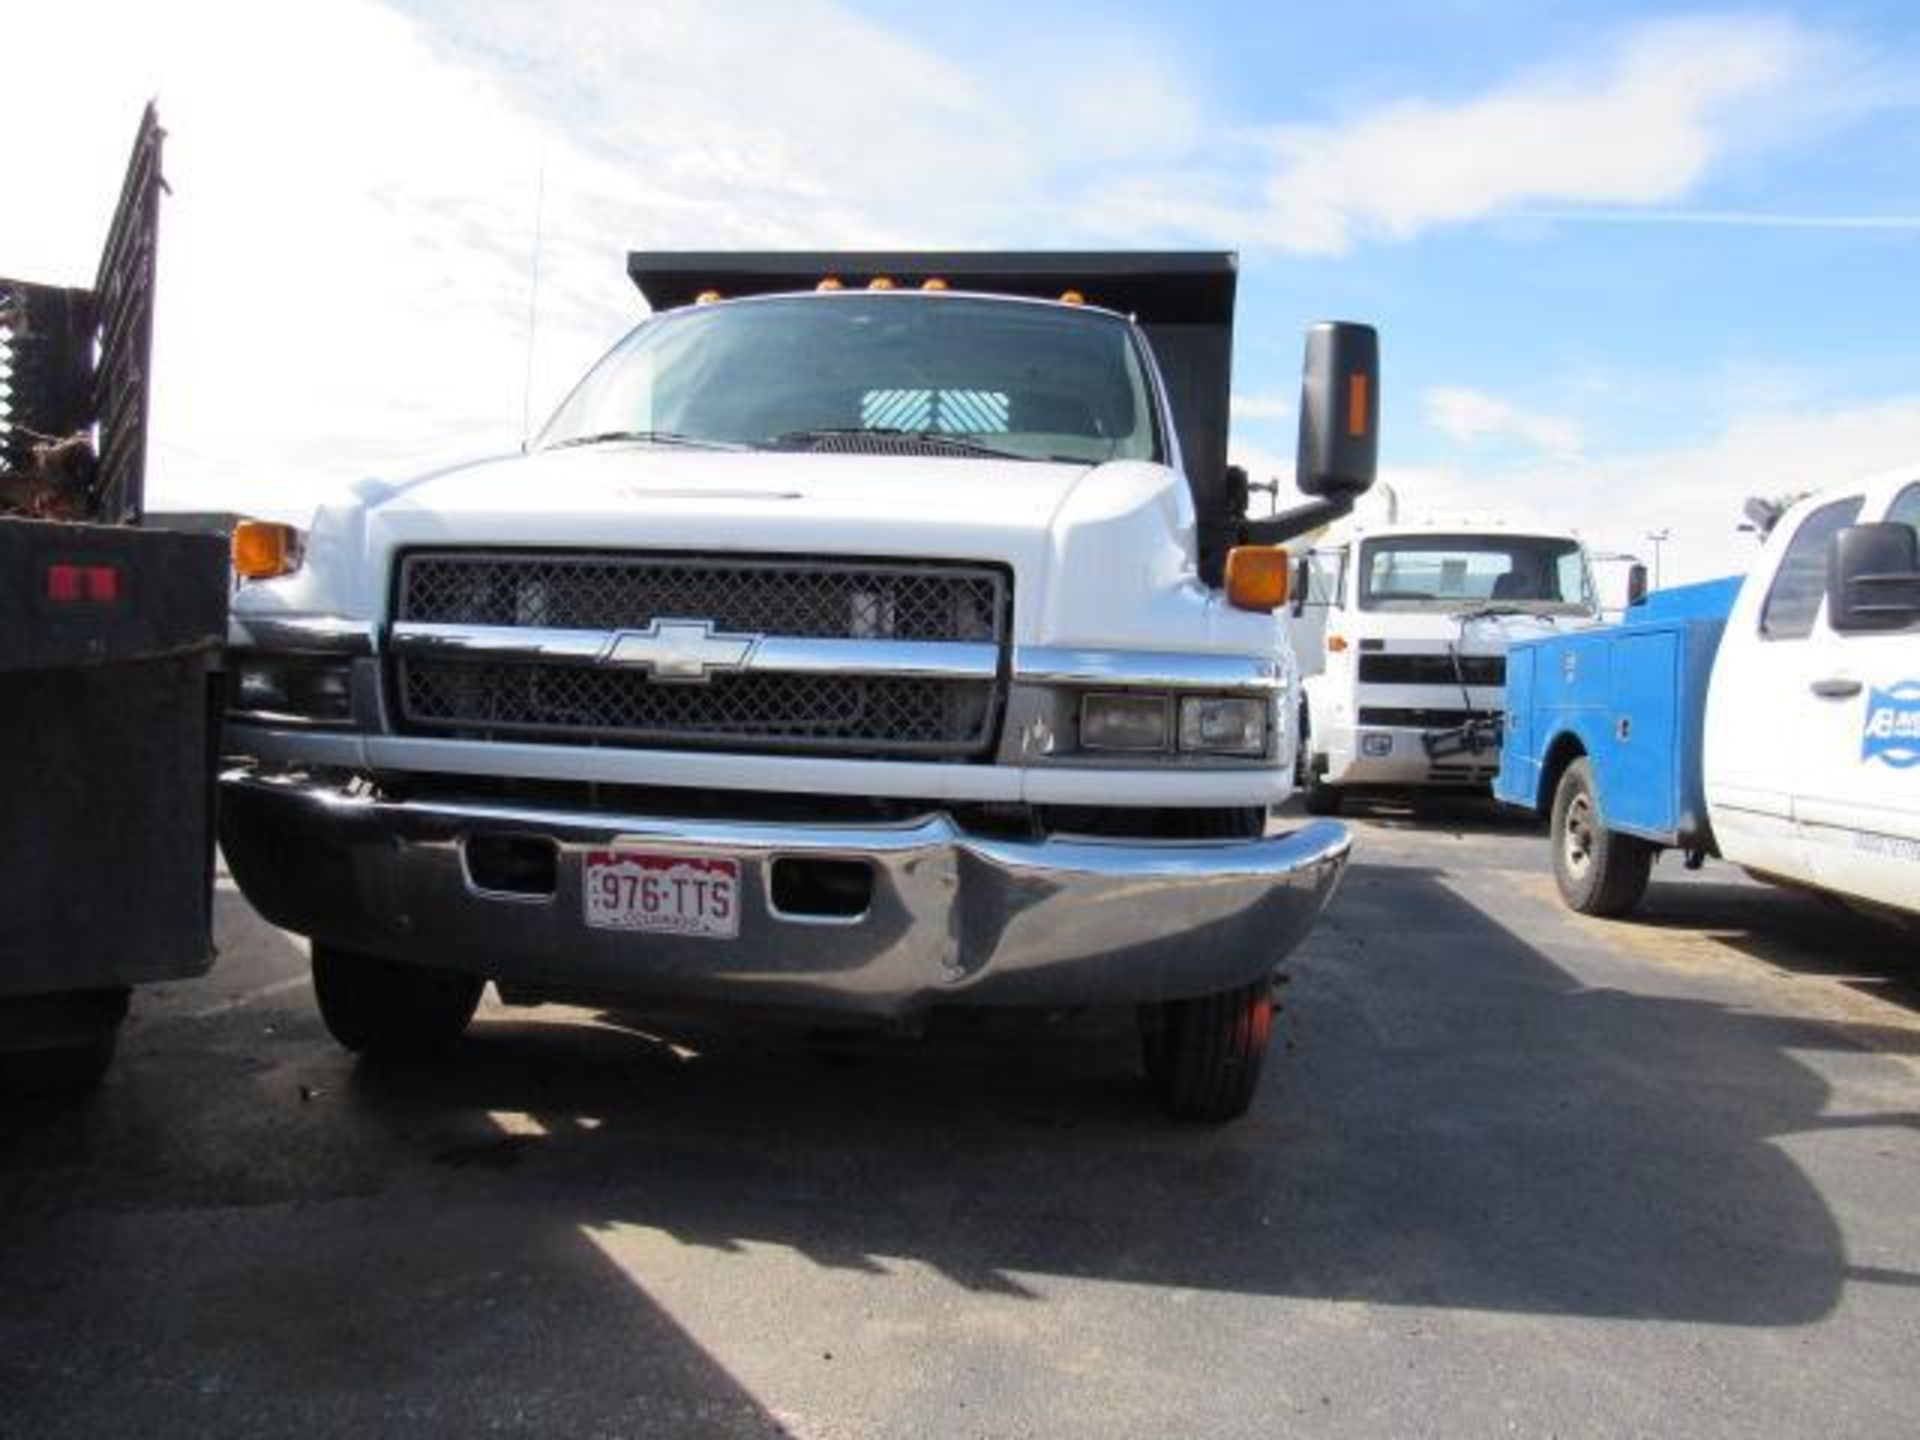 2007 Chevrolet C4500 Dump Truck, VIN # 1GBE4C1907F426565, Duramax Diesel Engine, Rugby 12 ft. - Image 2 of 9